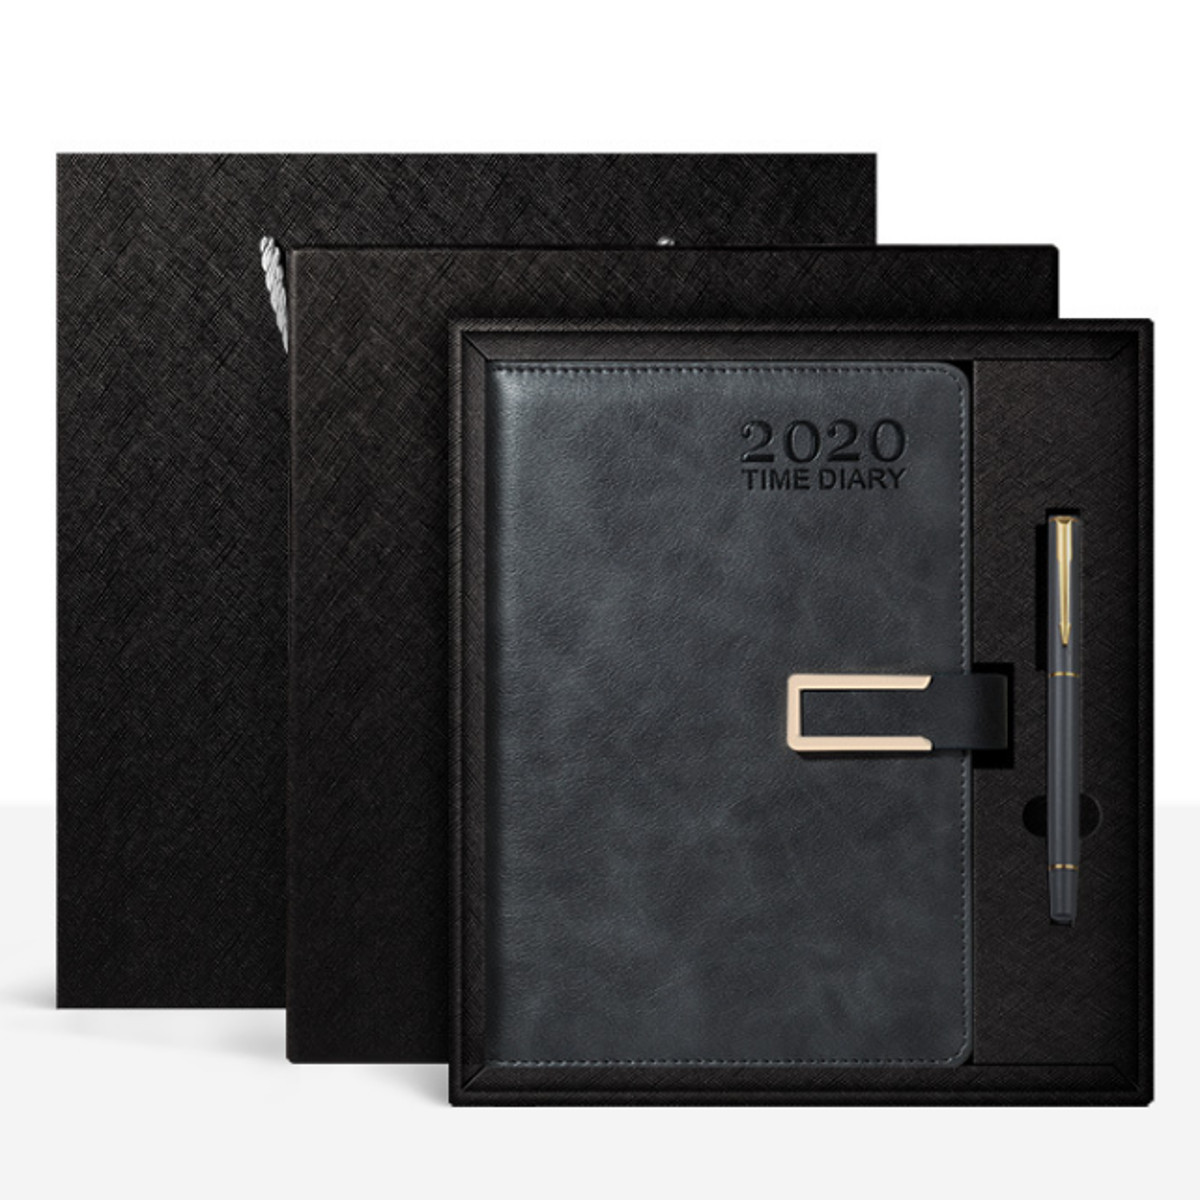 2020-schedule-book-365-days-daily-schedule-calendar-notepad-work-log-notebook-1617396-1